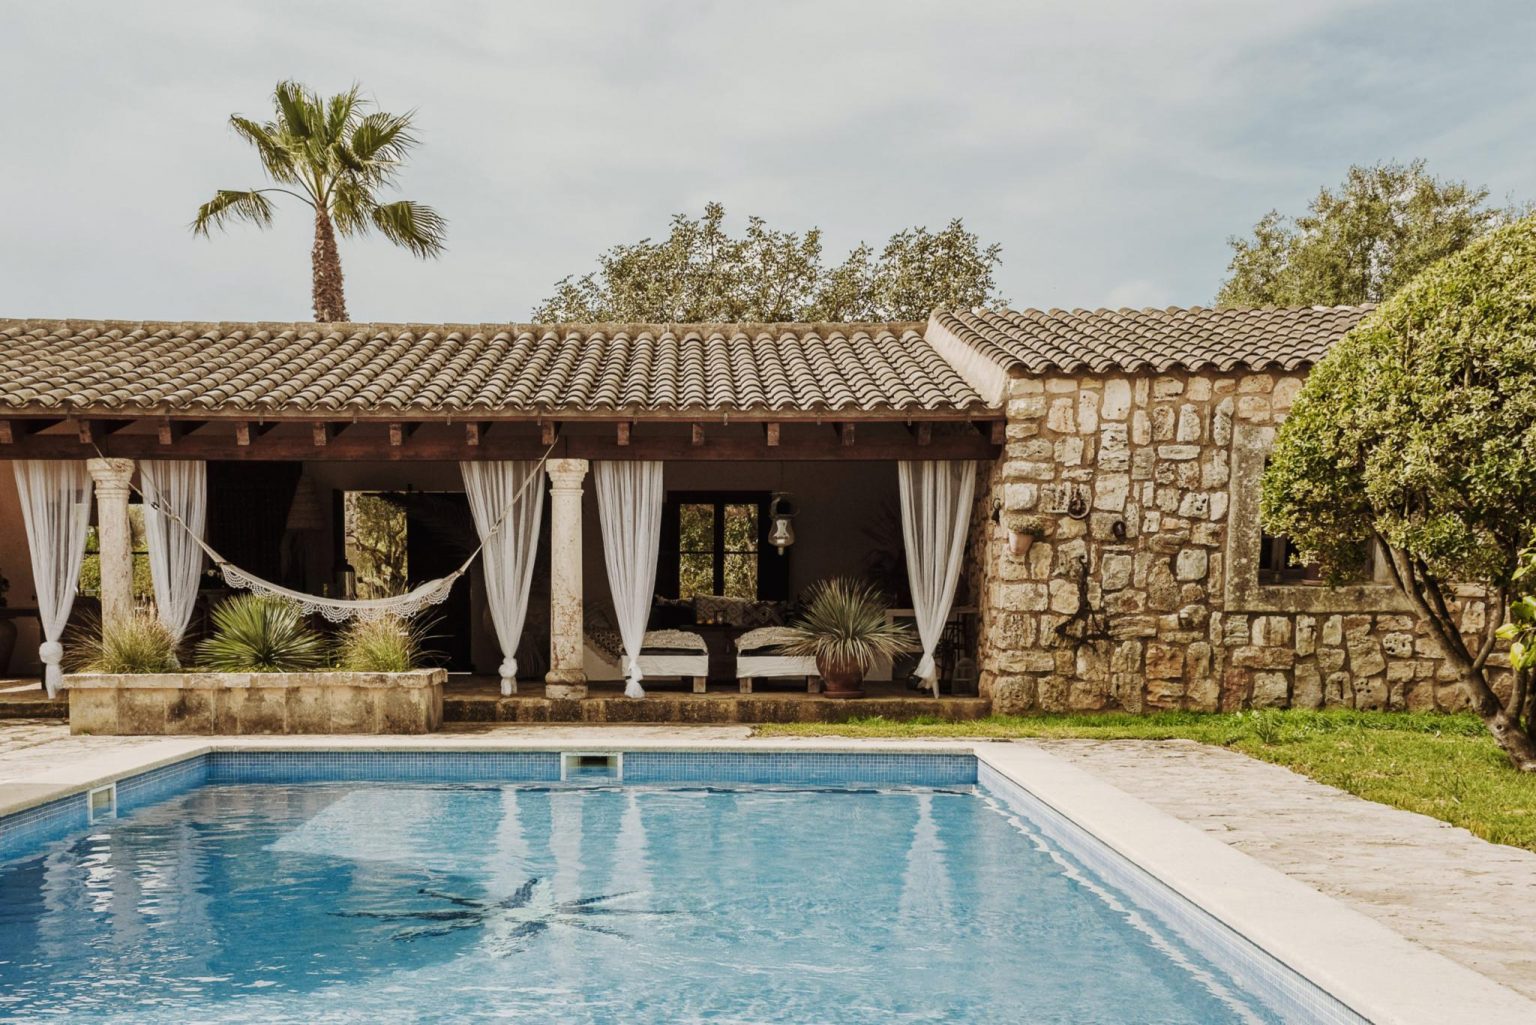 terrasse maison en pierres avec piscine